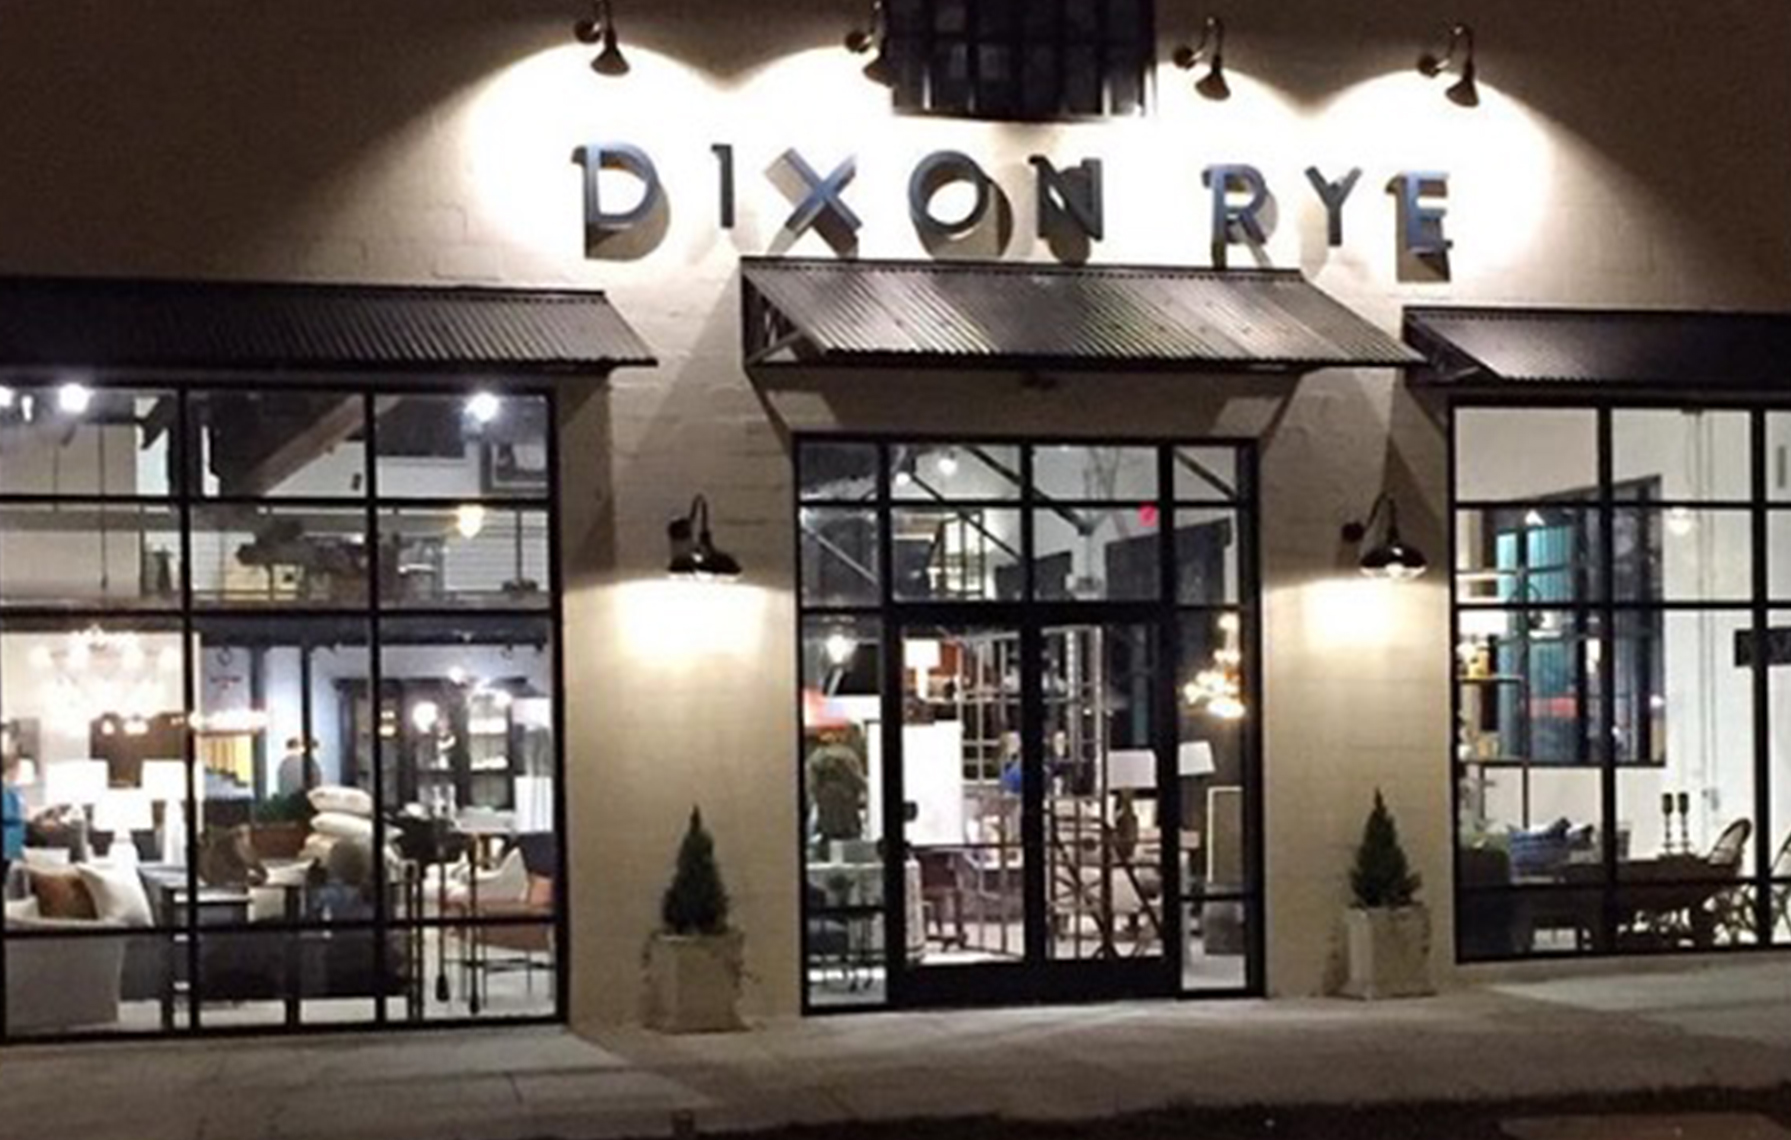 Dixon Rye Flint and Kent Alex Bates Retail Consulting Sarah Dorio small batch makers image